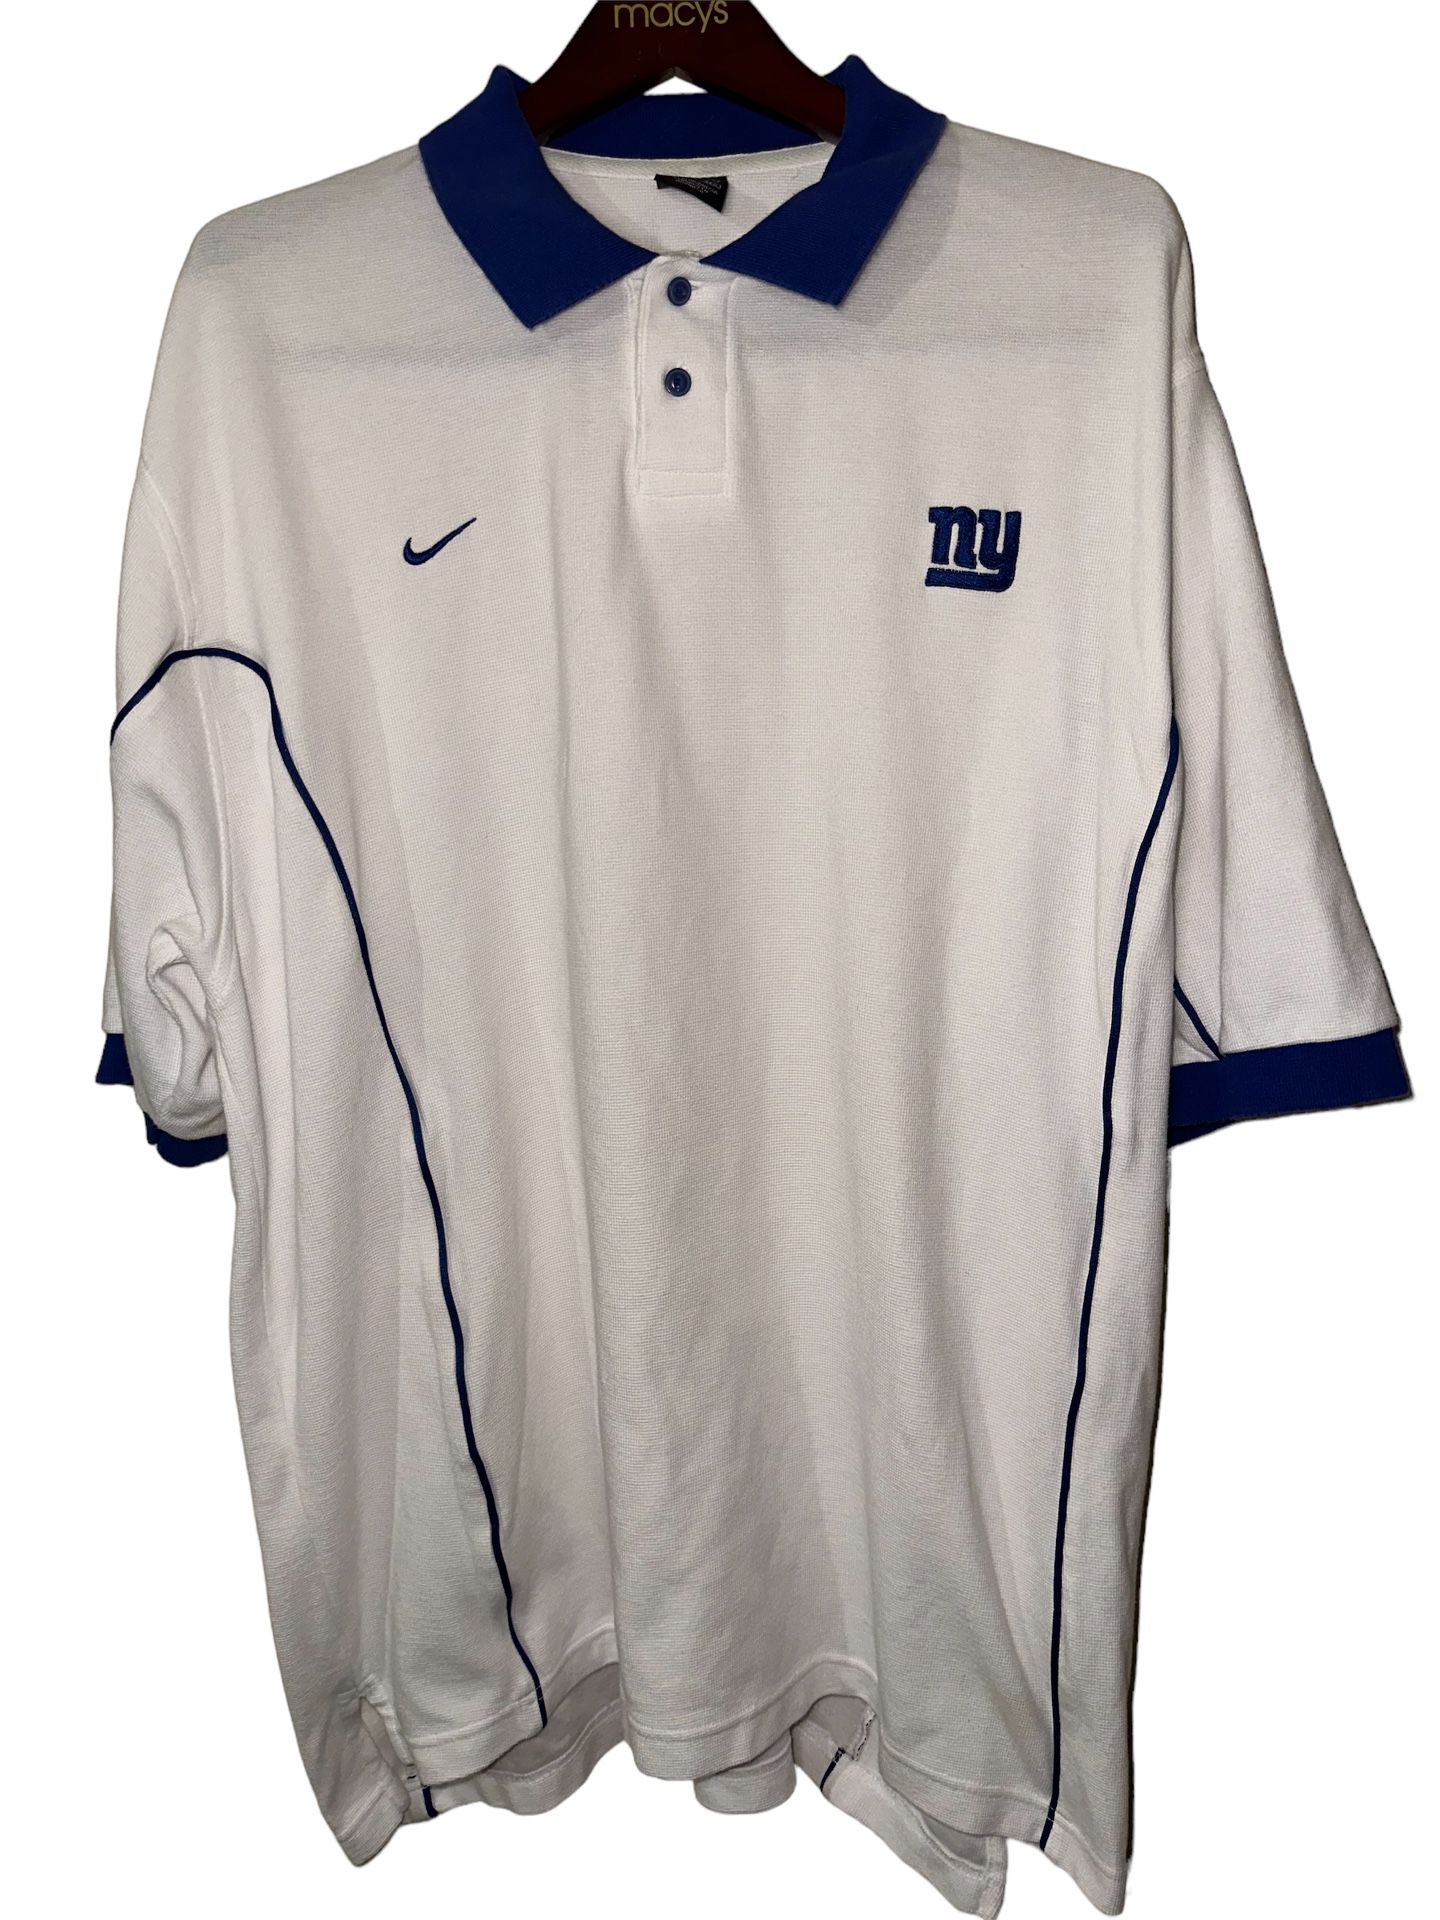 Vtg Nike Team New York Giants Polo Shirt XL White Short Sleeve NFL Football for Sale in La Feria, TX - OfferUp